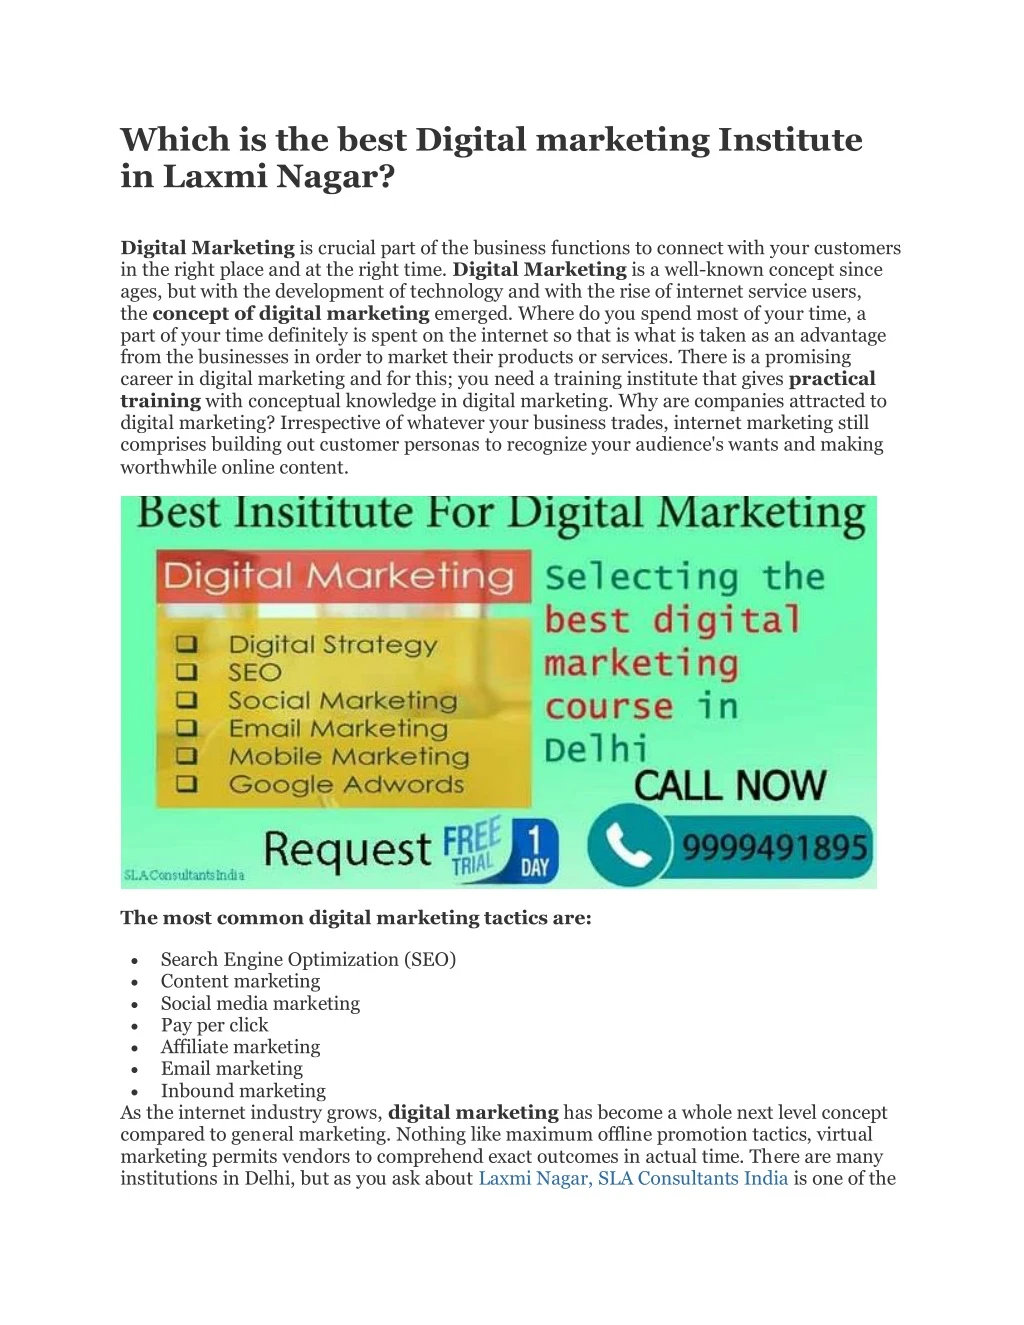 which is the best digital marketing institute